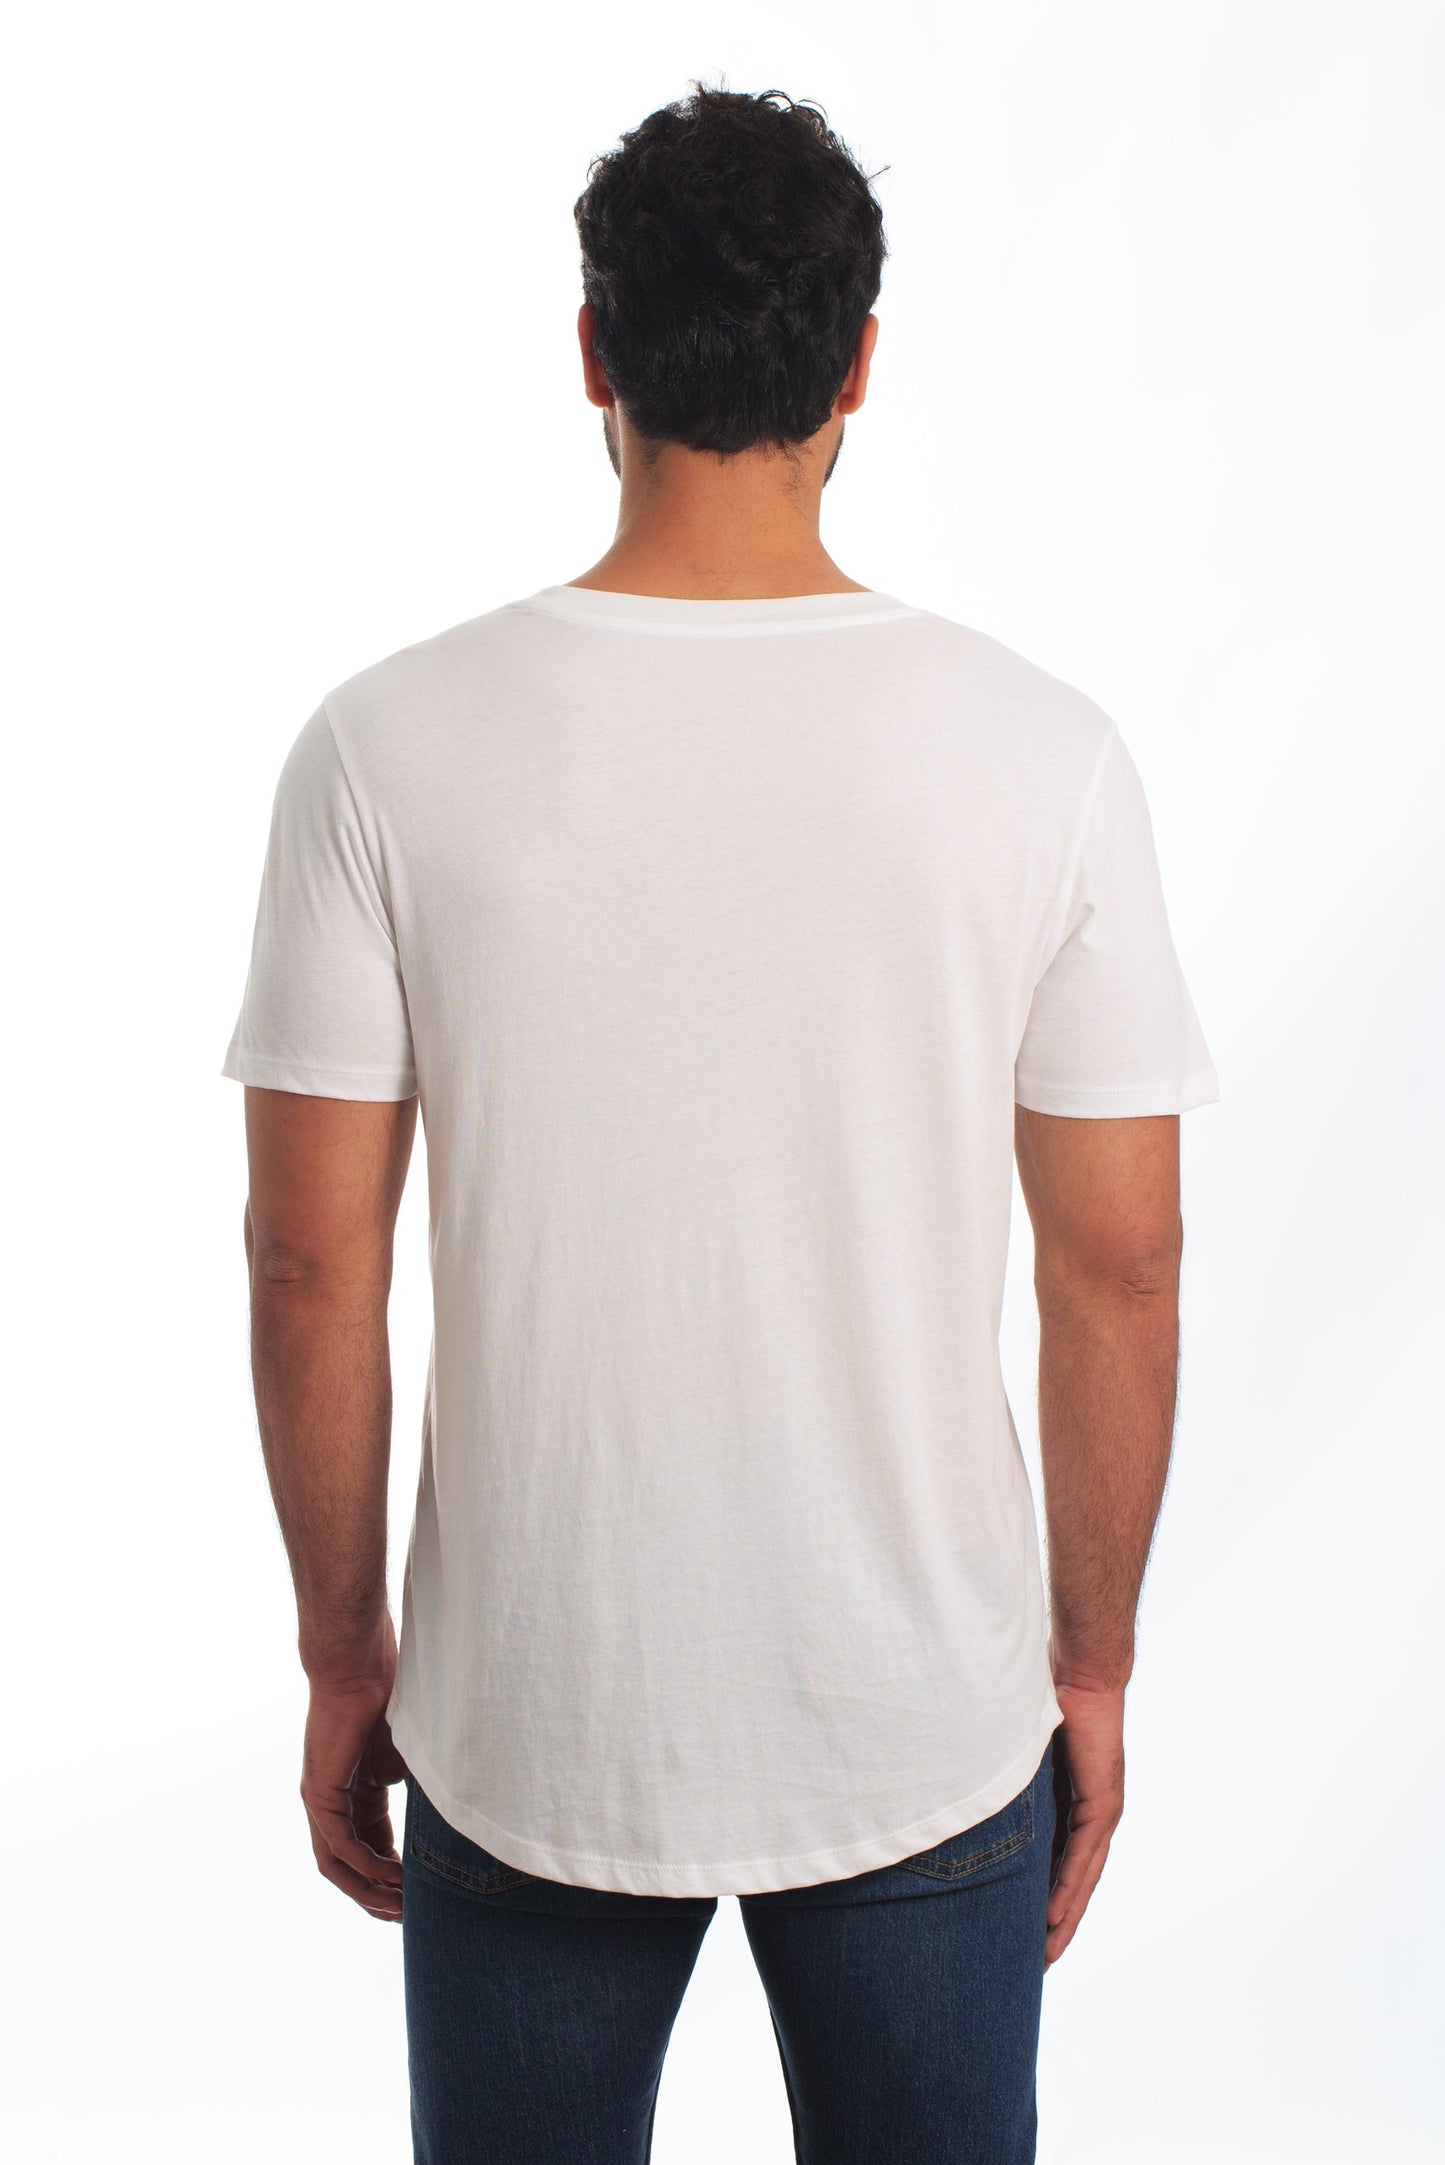 White T-Shirt TEE-120 Back